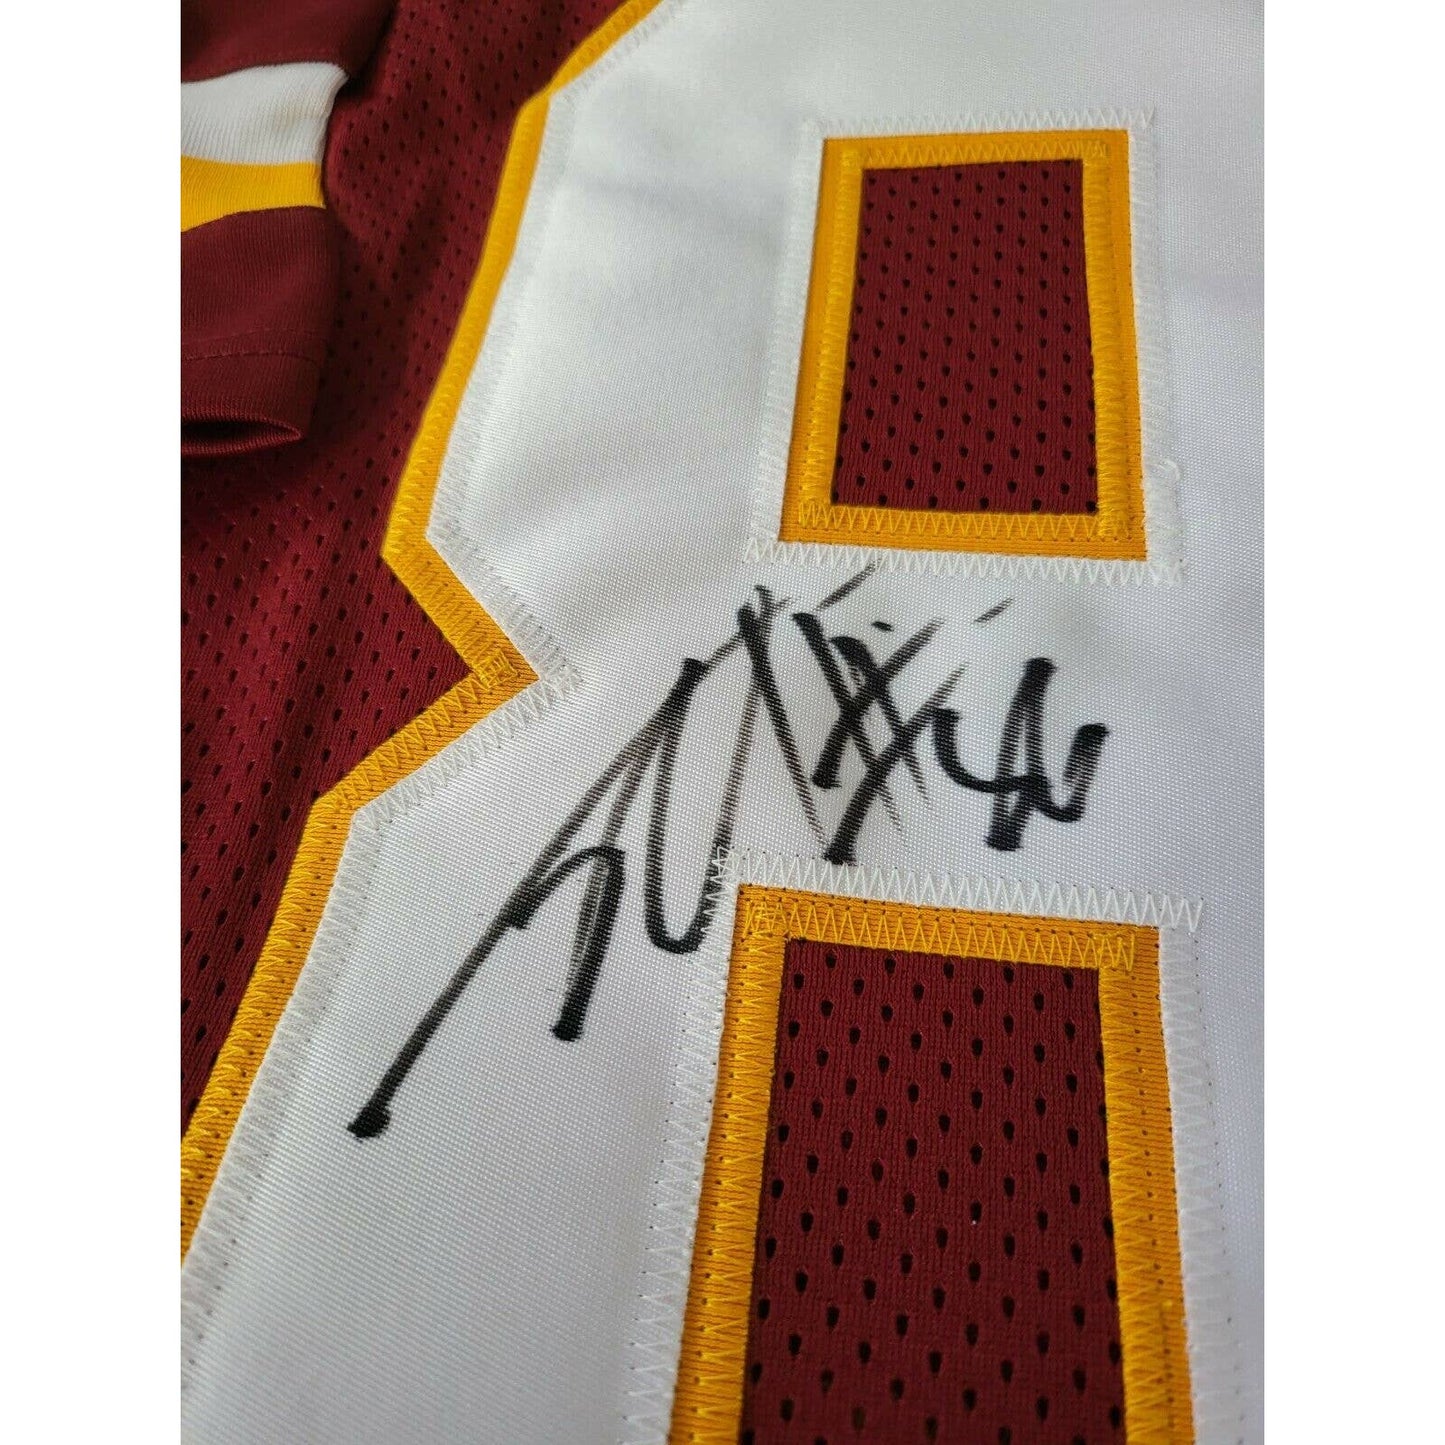 Jordan Reed Autographed/Signed Jersey JSA COA Washington Football Team - TreasuresEvolved